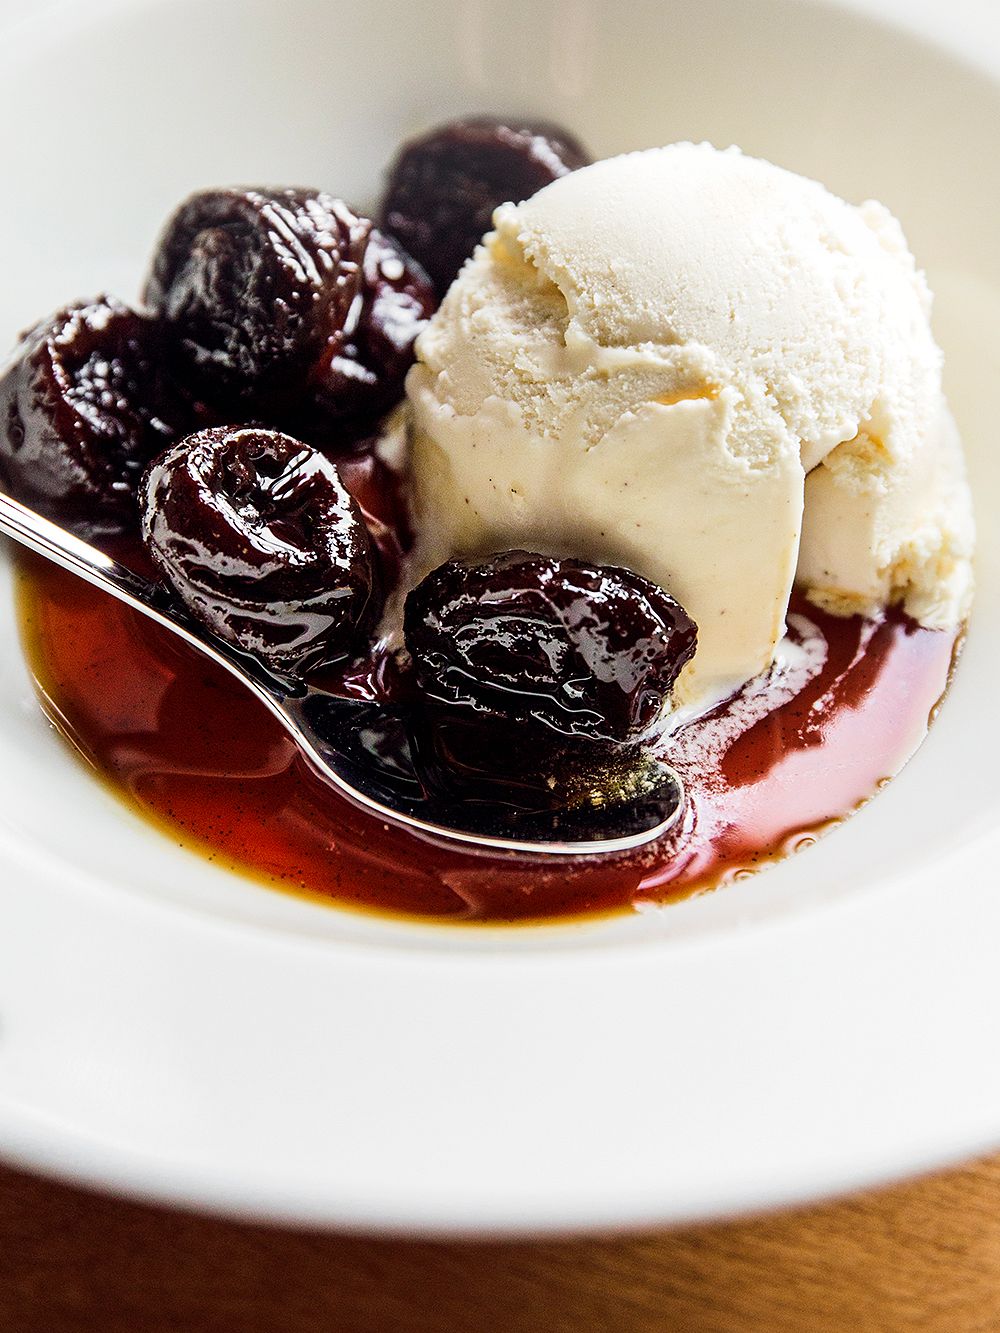 Festive desserts: Rum plums and vanilla ice cream on Arabia's KoKo plate